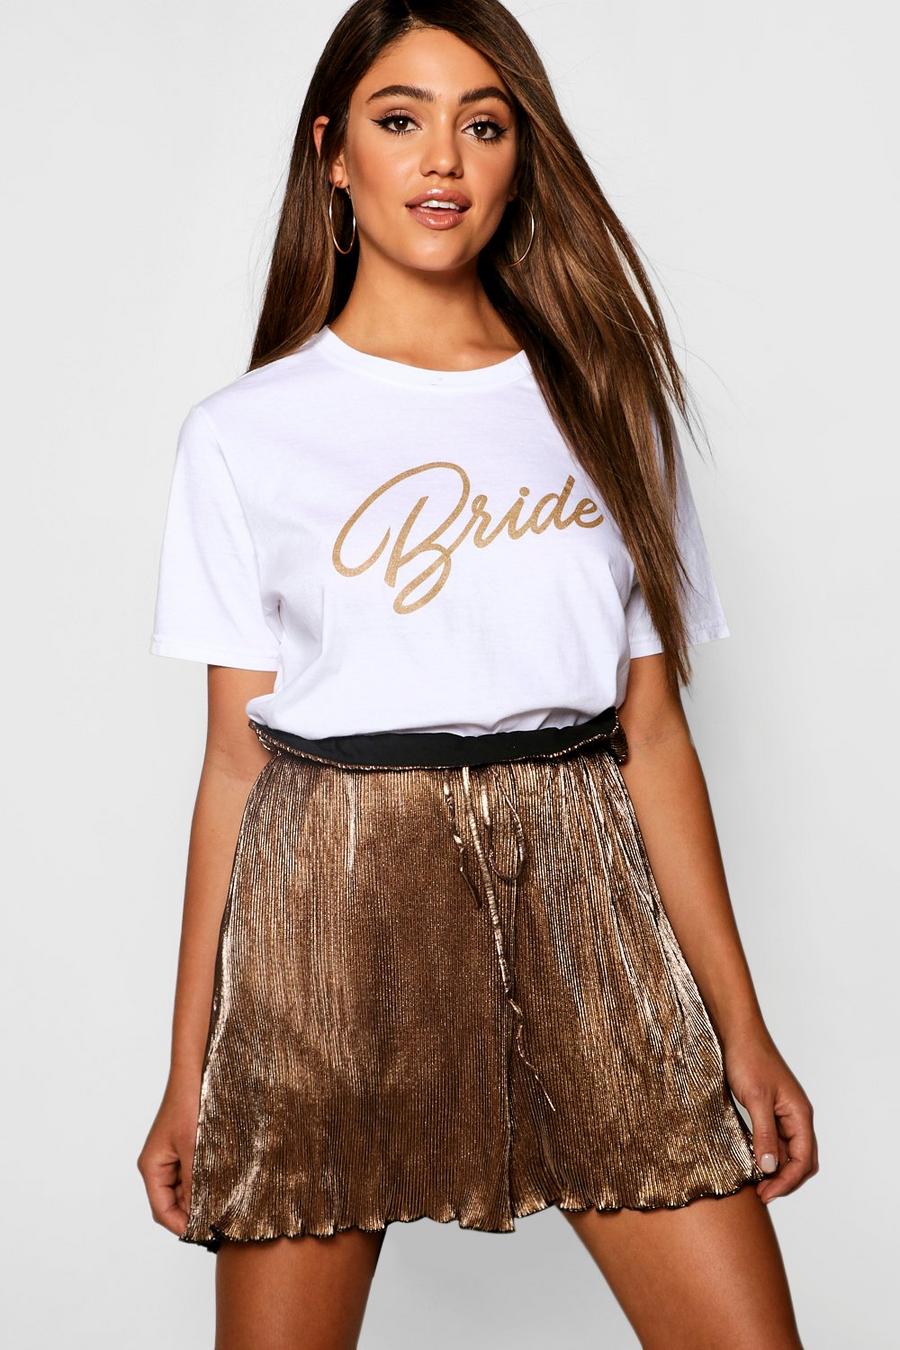 Camiseta con eslogan "Bride" image number 1